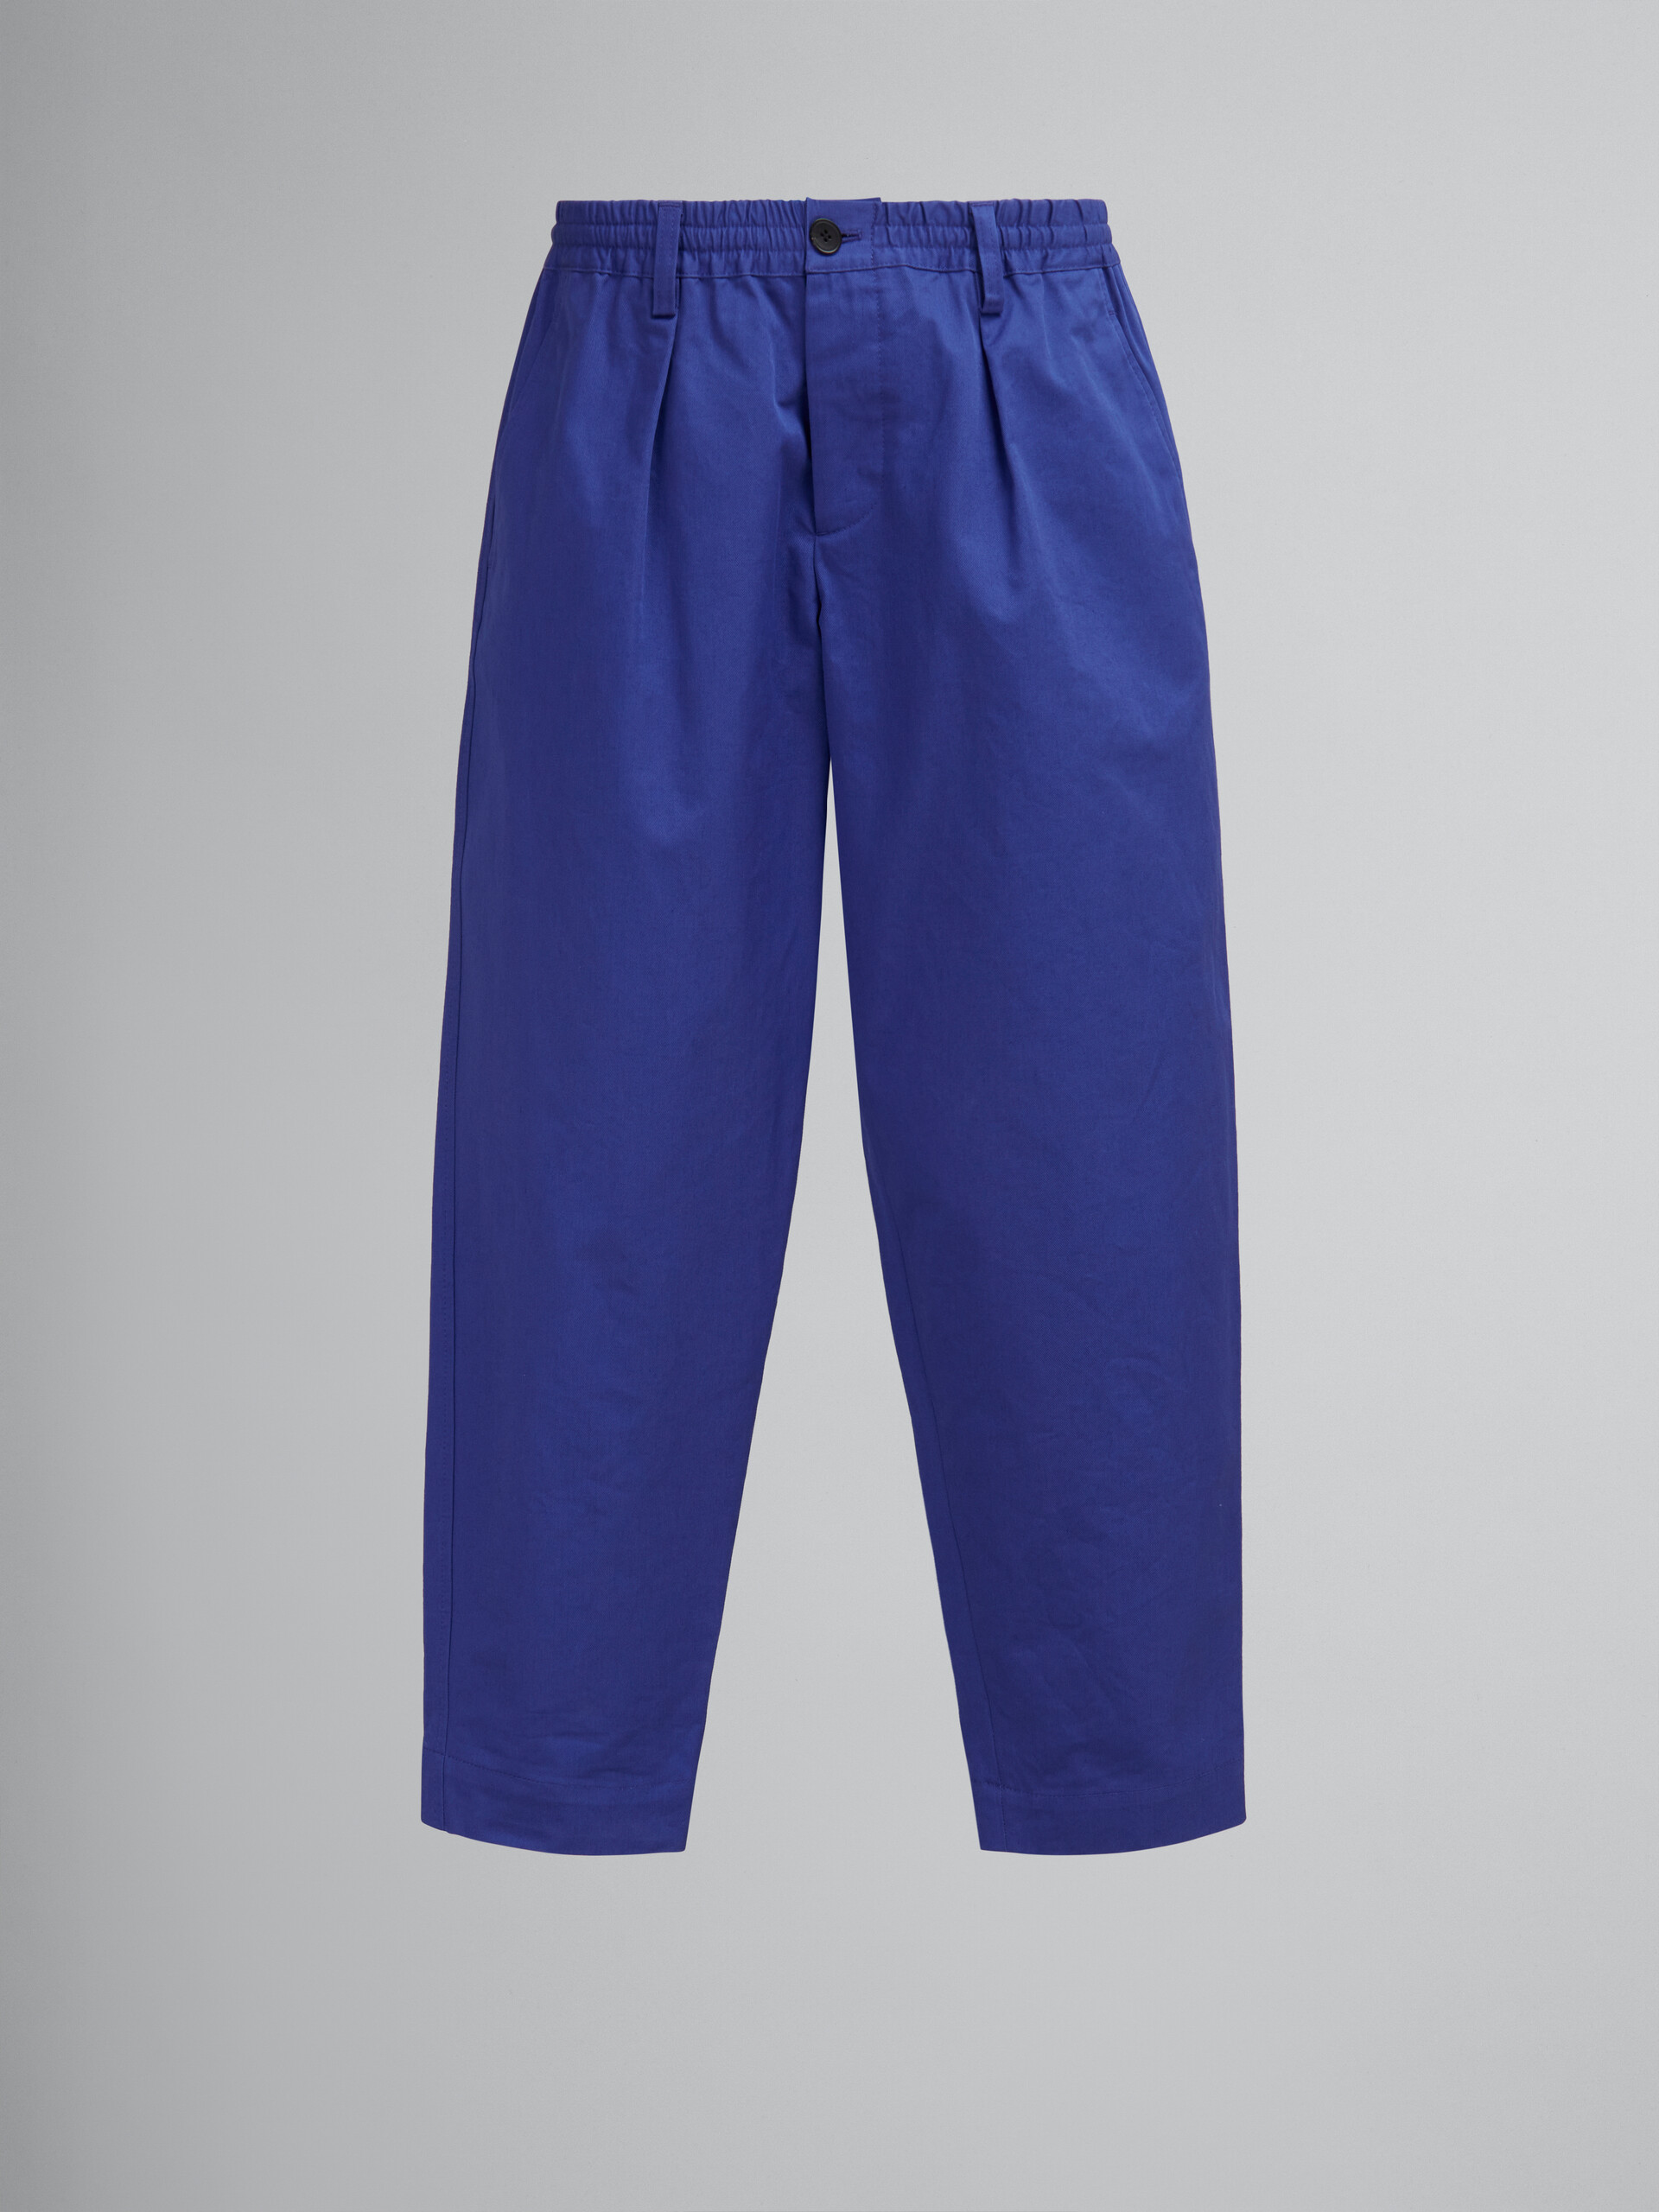 Pantaloni in gabardine biologico blu con coulisse in vita - Pantaloni - Image 1